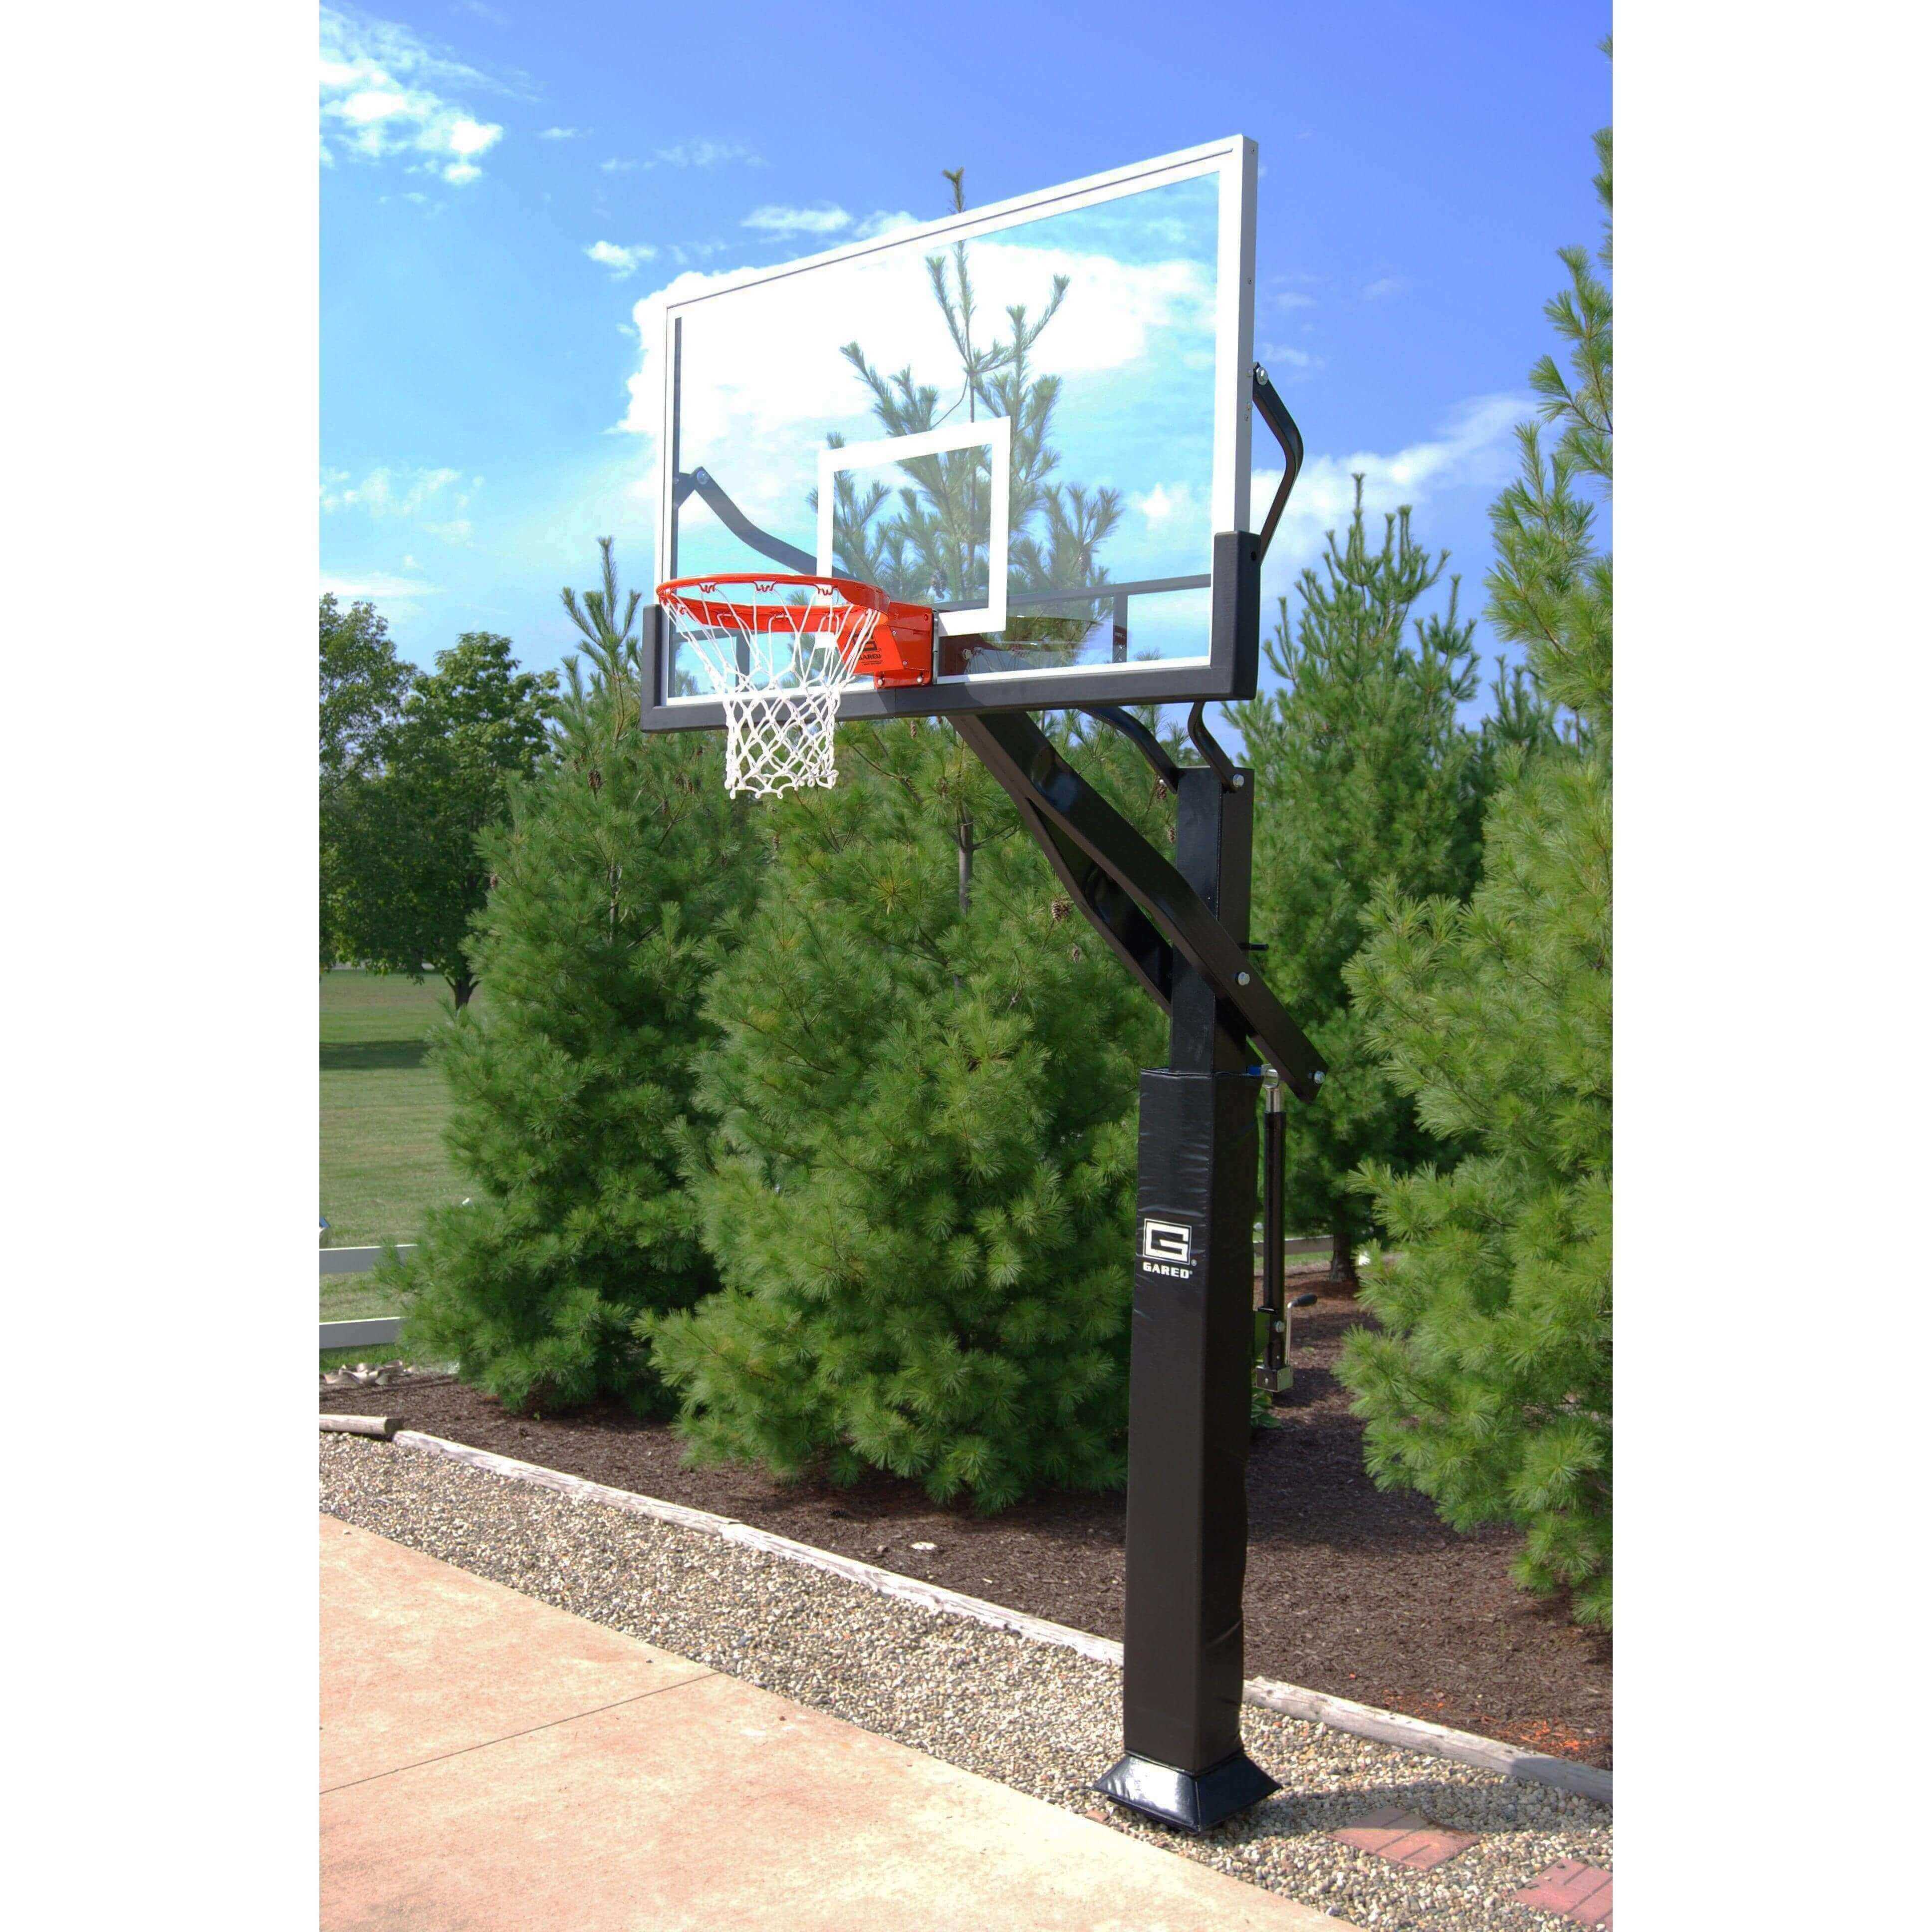 Gared Sports Pro Jam Adjustable Basketball System